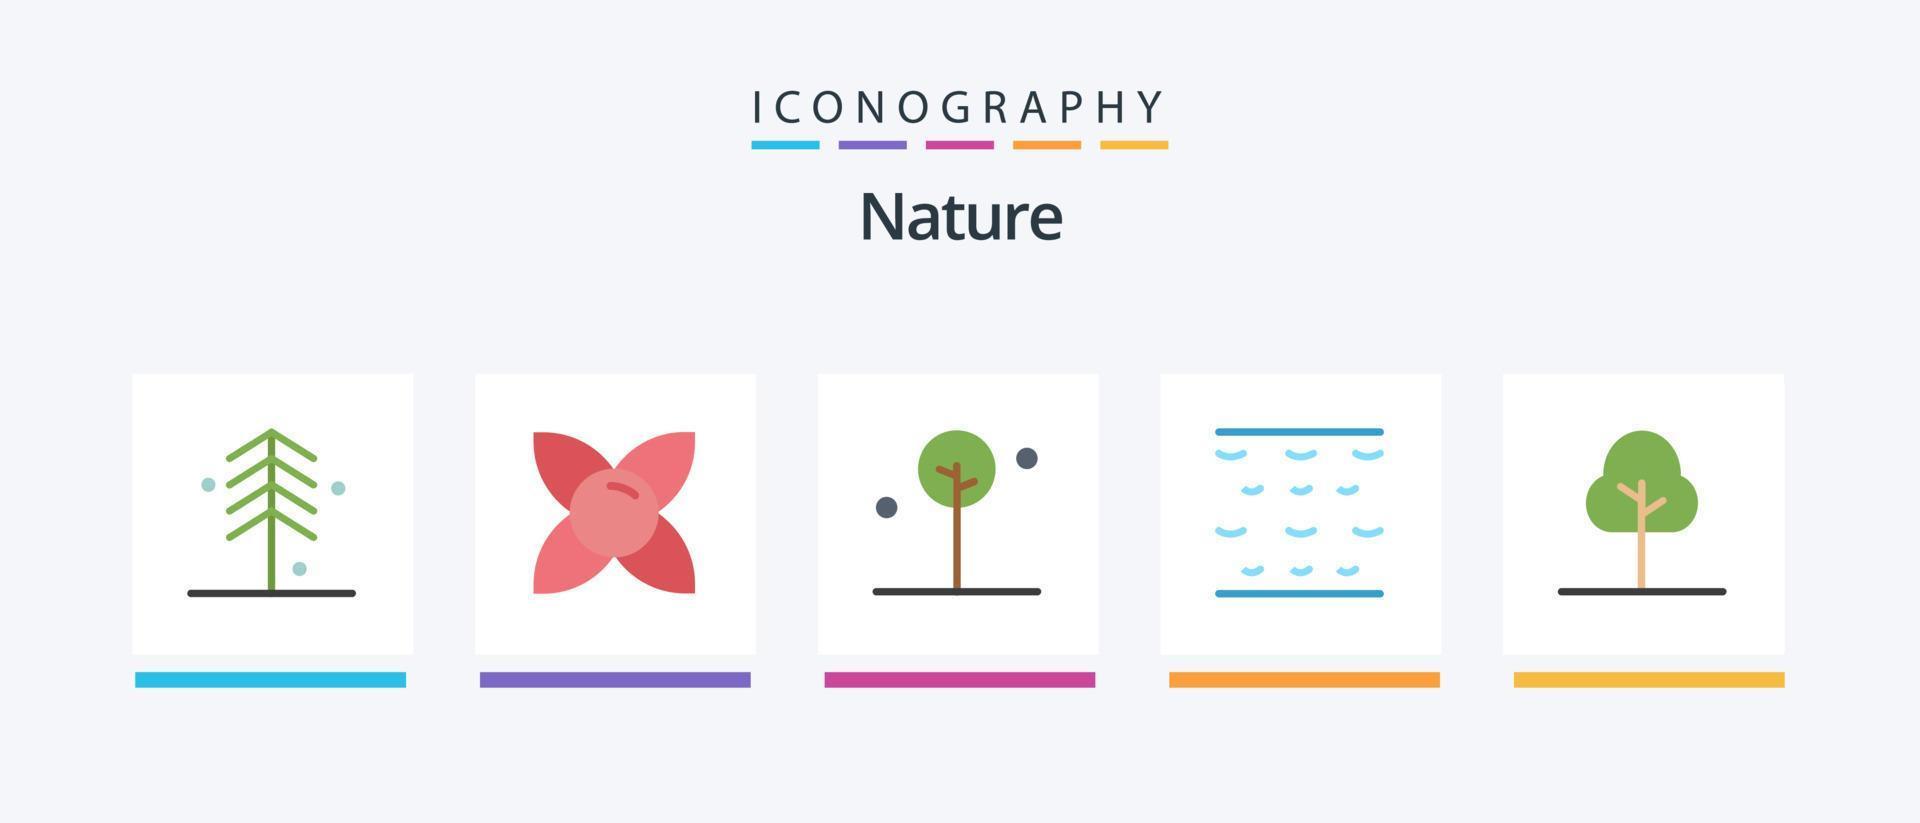 paquete de iconos de naturaleza plana 5 que incluye la naturaleza. árbol. bosque. ondas. mar. diseño de iconos creativos vector